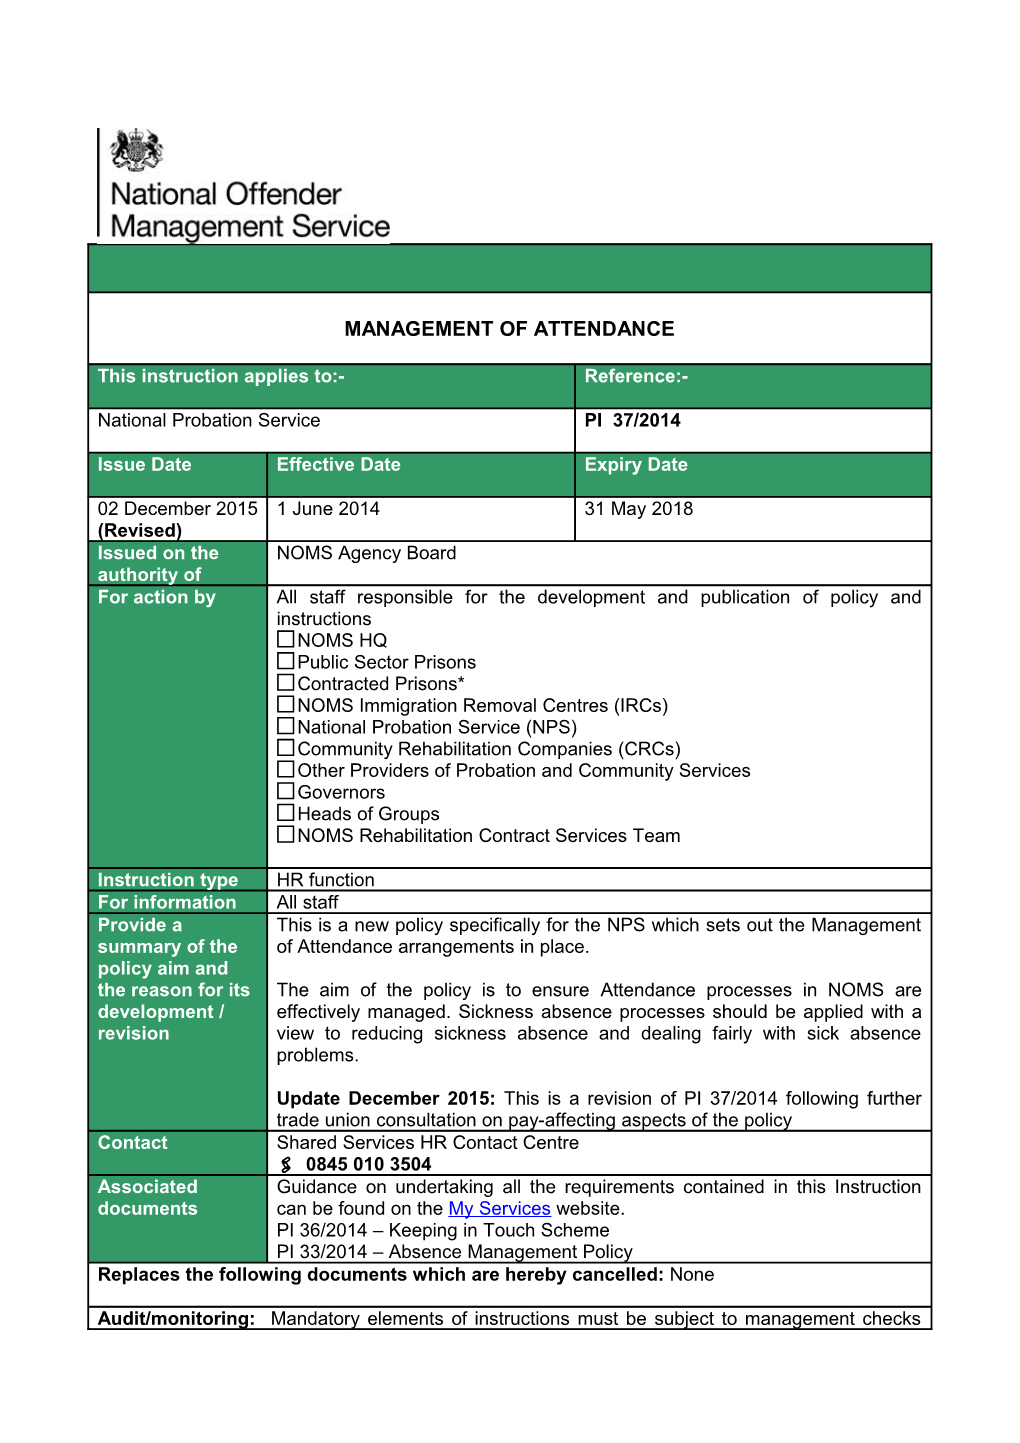 PI 37/2014: Management of Attendance